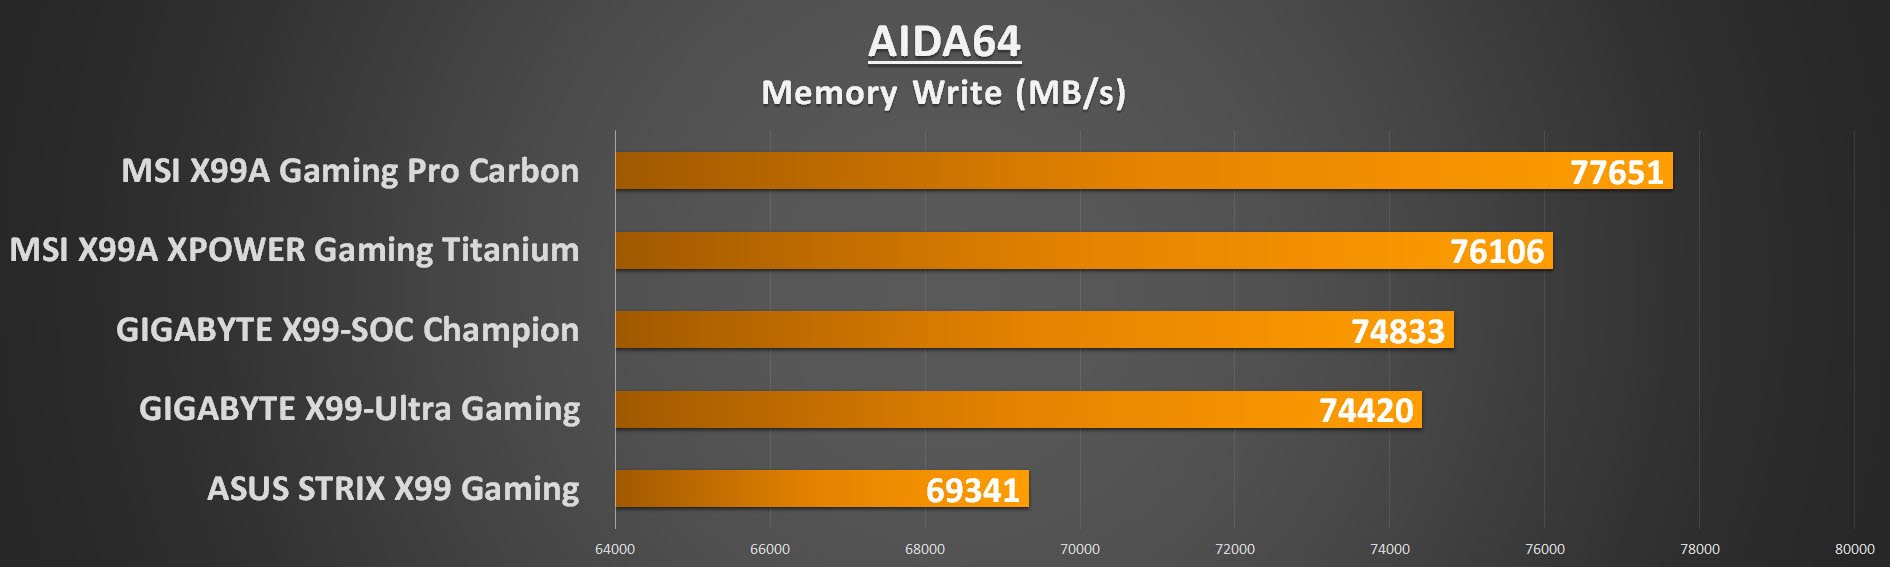 gigabyte-x99-ultra-gaming-aida-mem-write